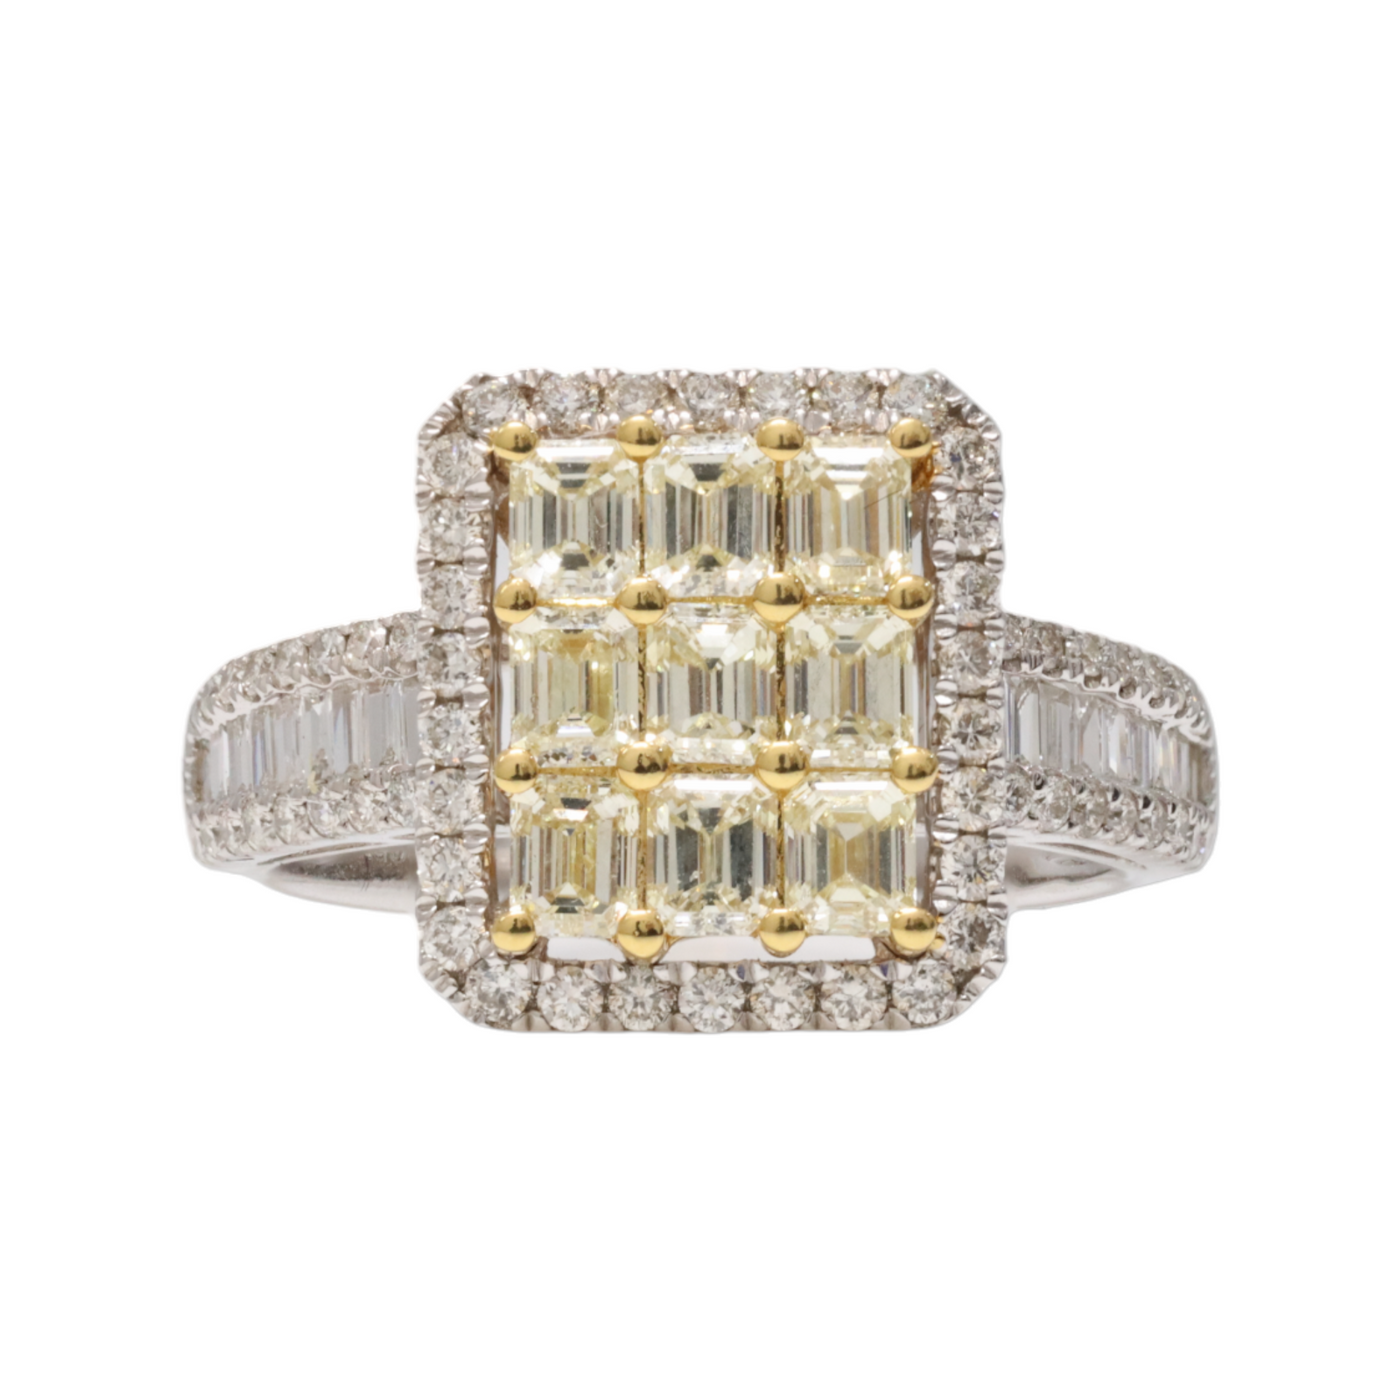 18ct White and Yellow Gold Diamond Ring